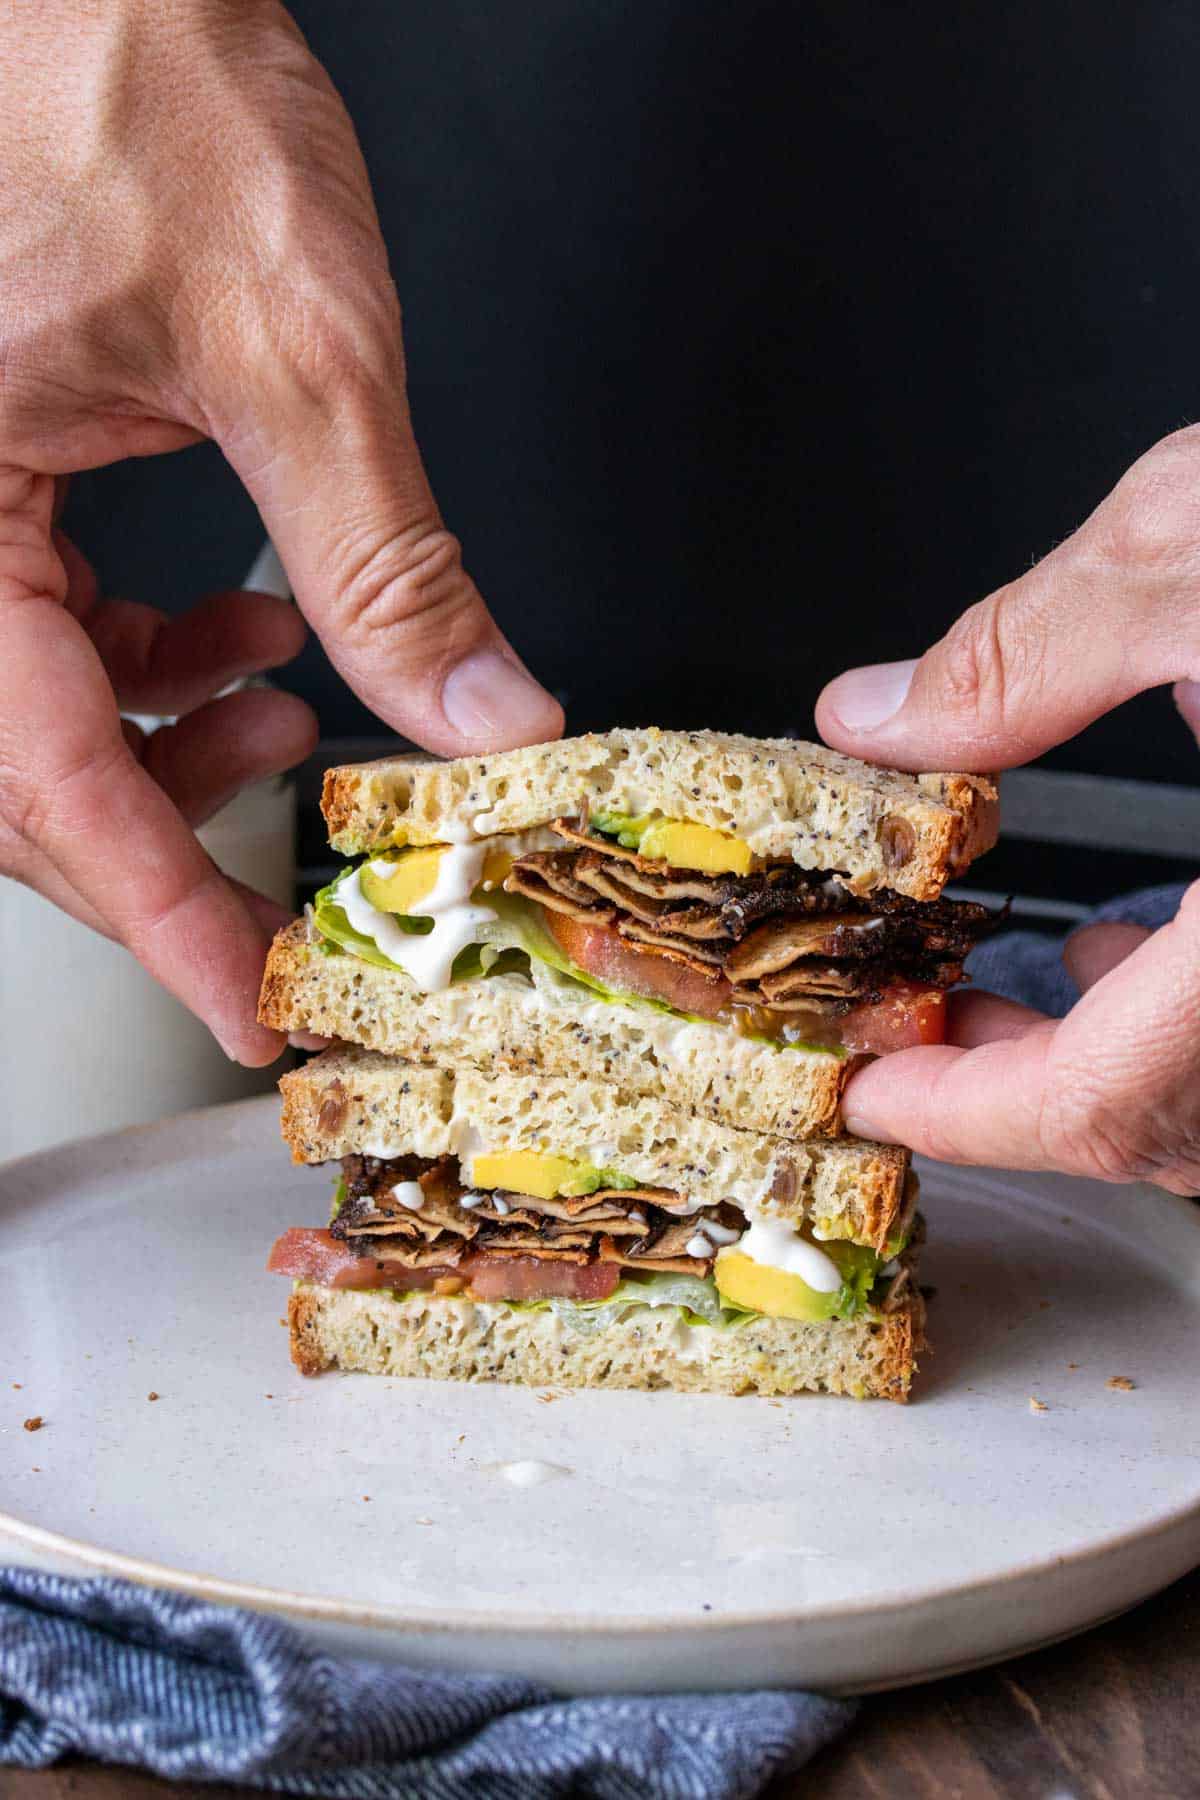 Hands grabbing half of a vegan BLT sandwich from a stack